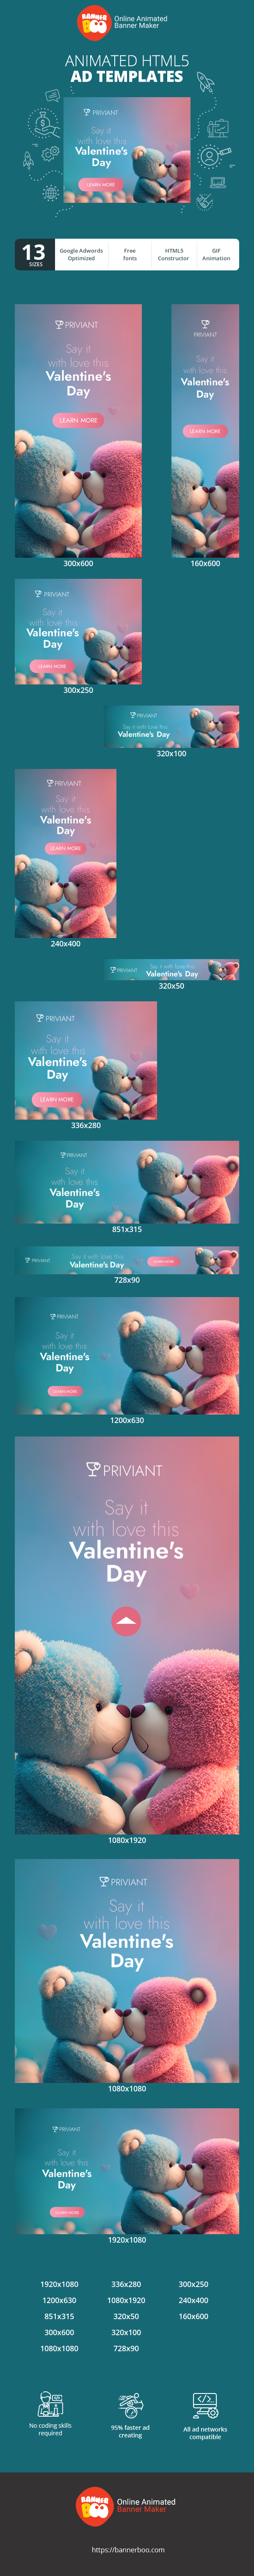 Шаблон рекламного банера — Say It With Love This Valentine's Day — Valentine's Day